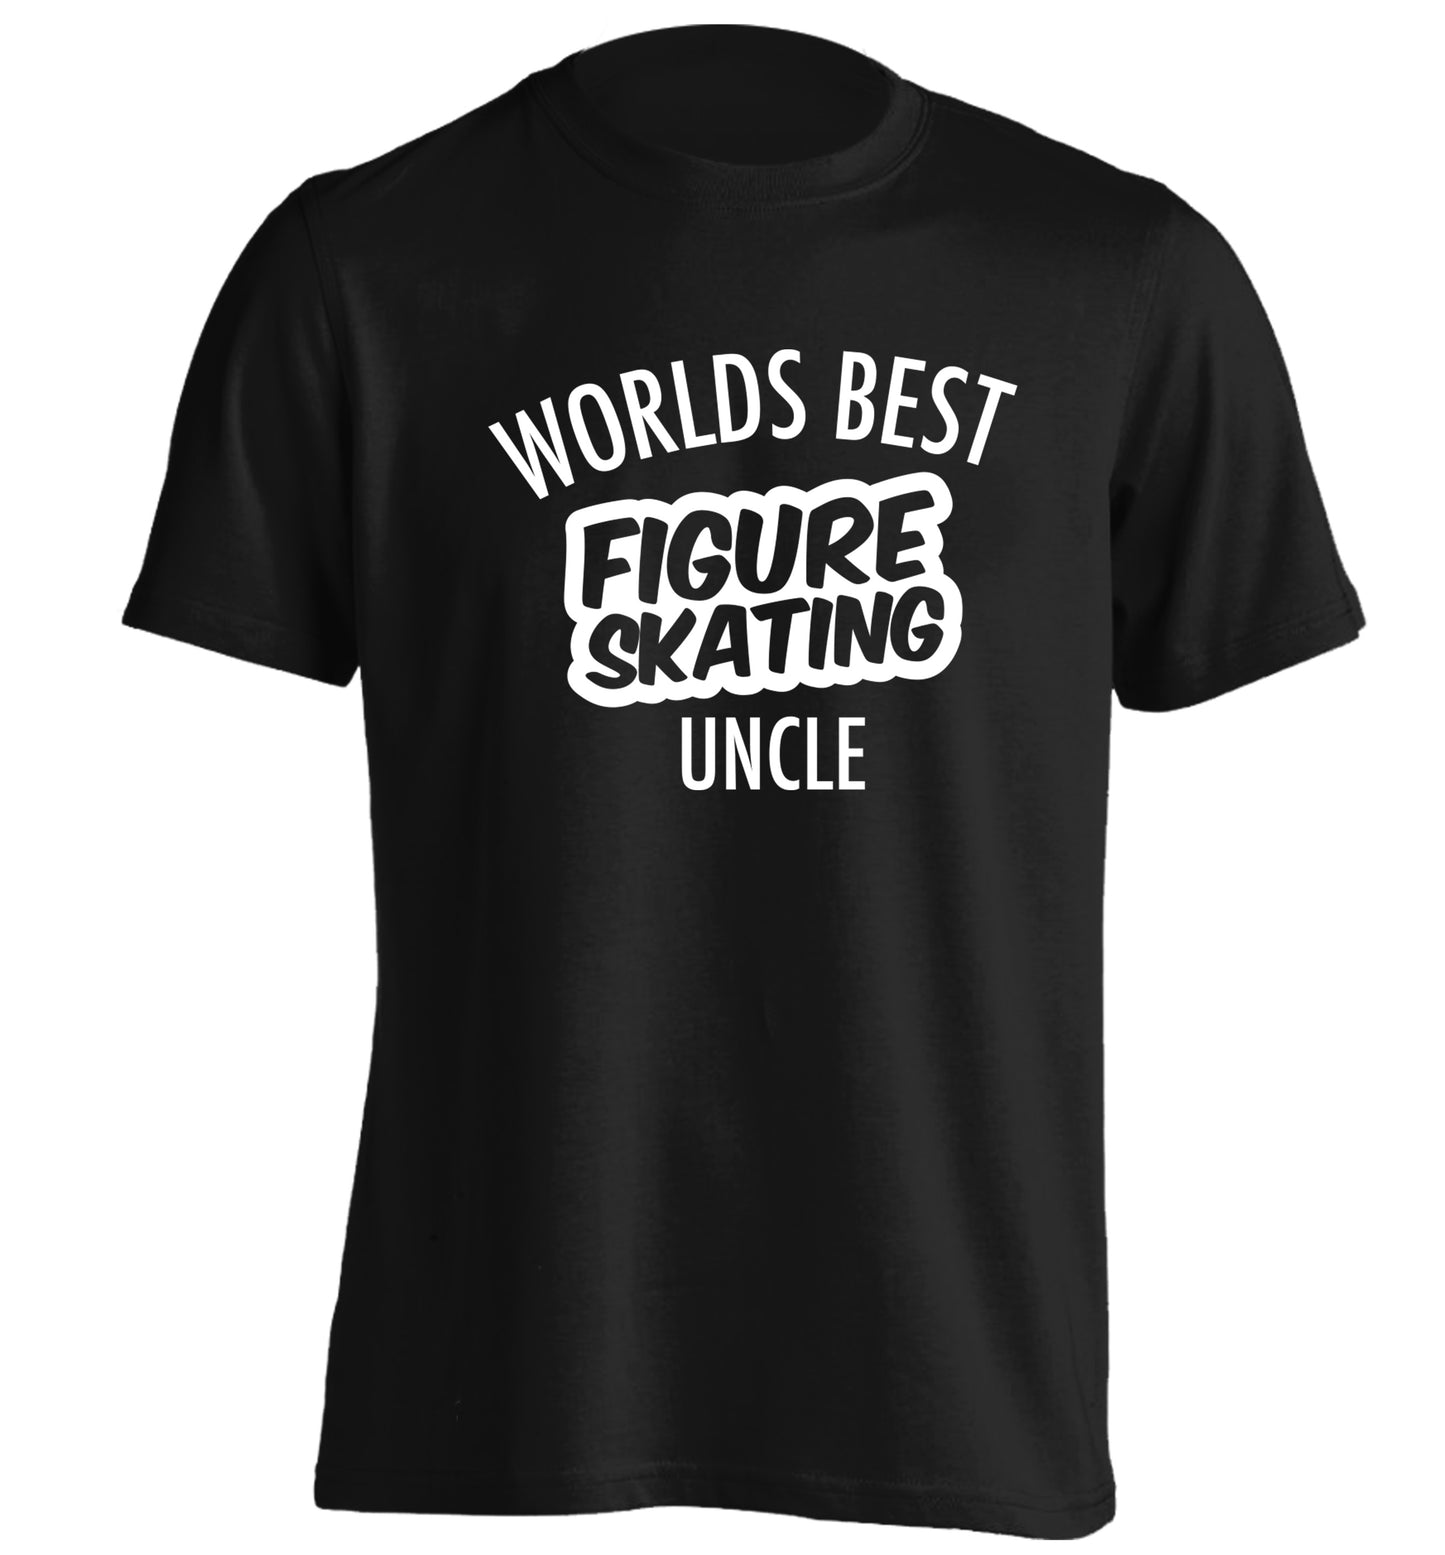 Worlds best figure skating uncle adults unisexblack Tshirt 2XL